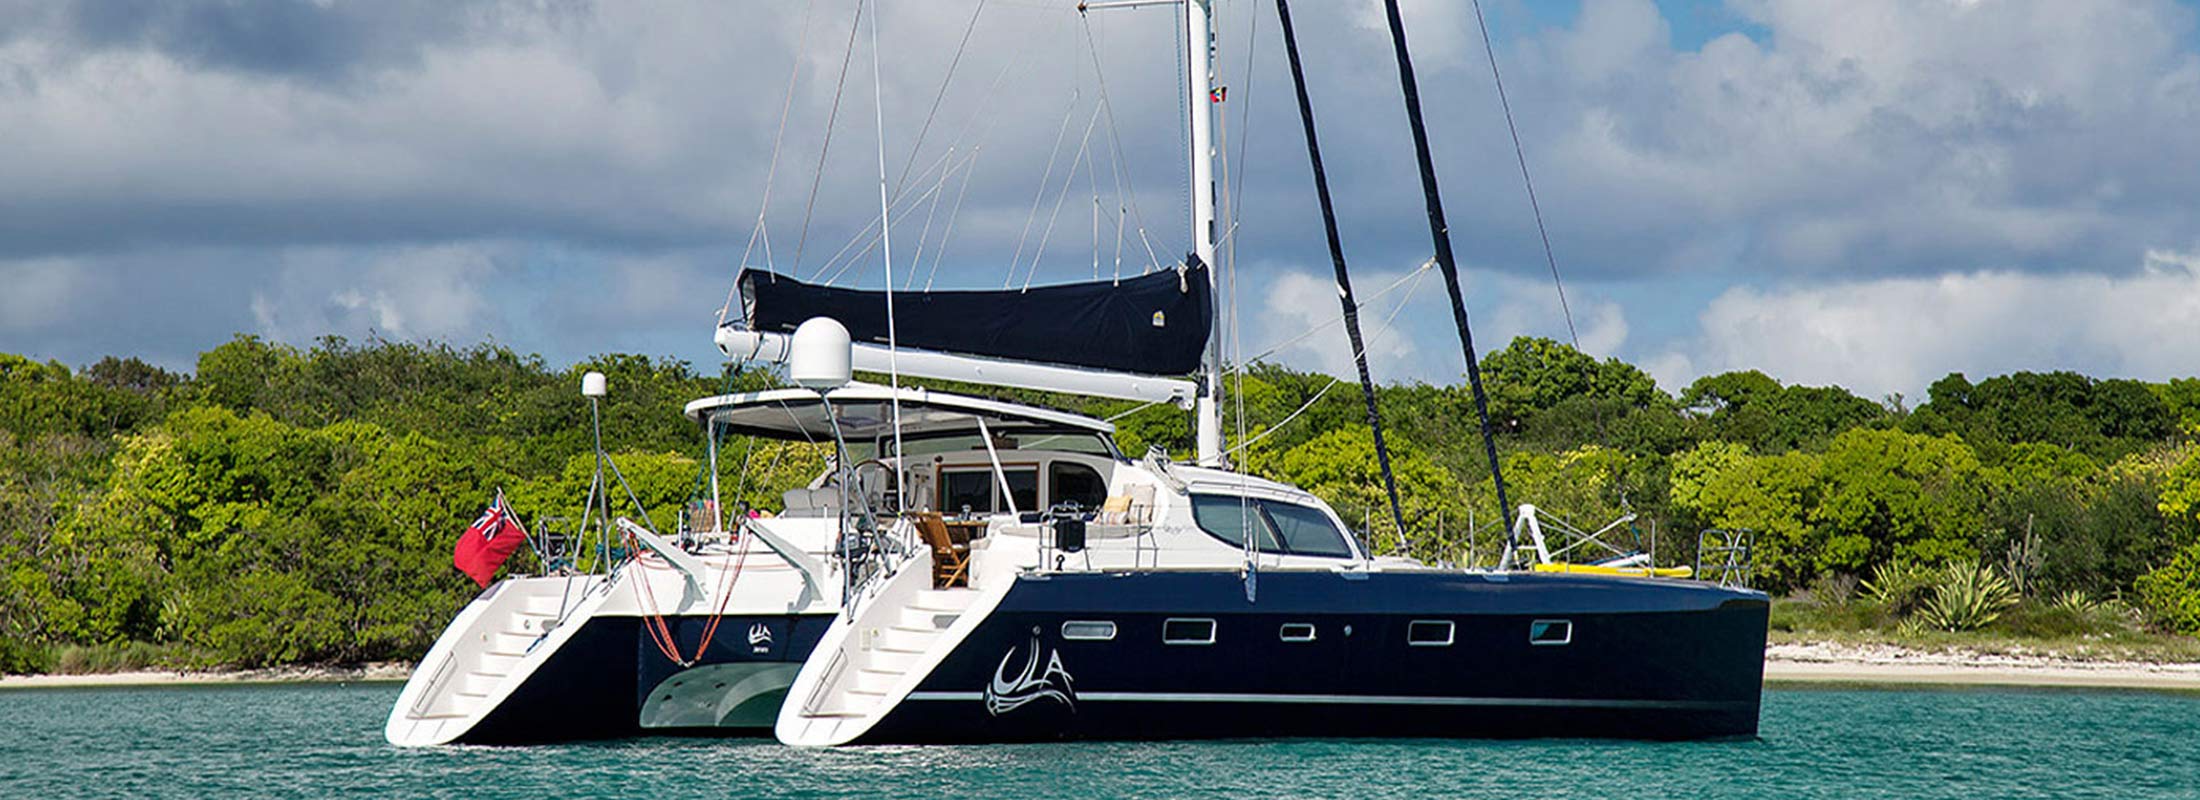 Ula Sailing Yacht for Charter Caribbean Sea slider 1